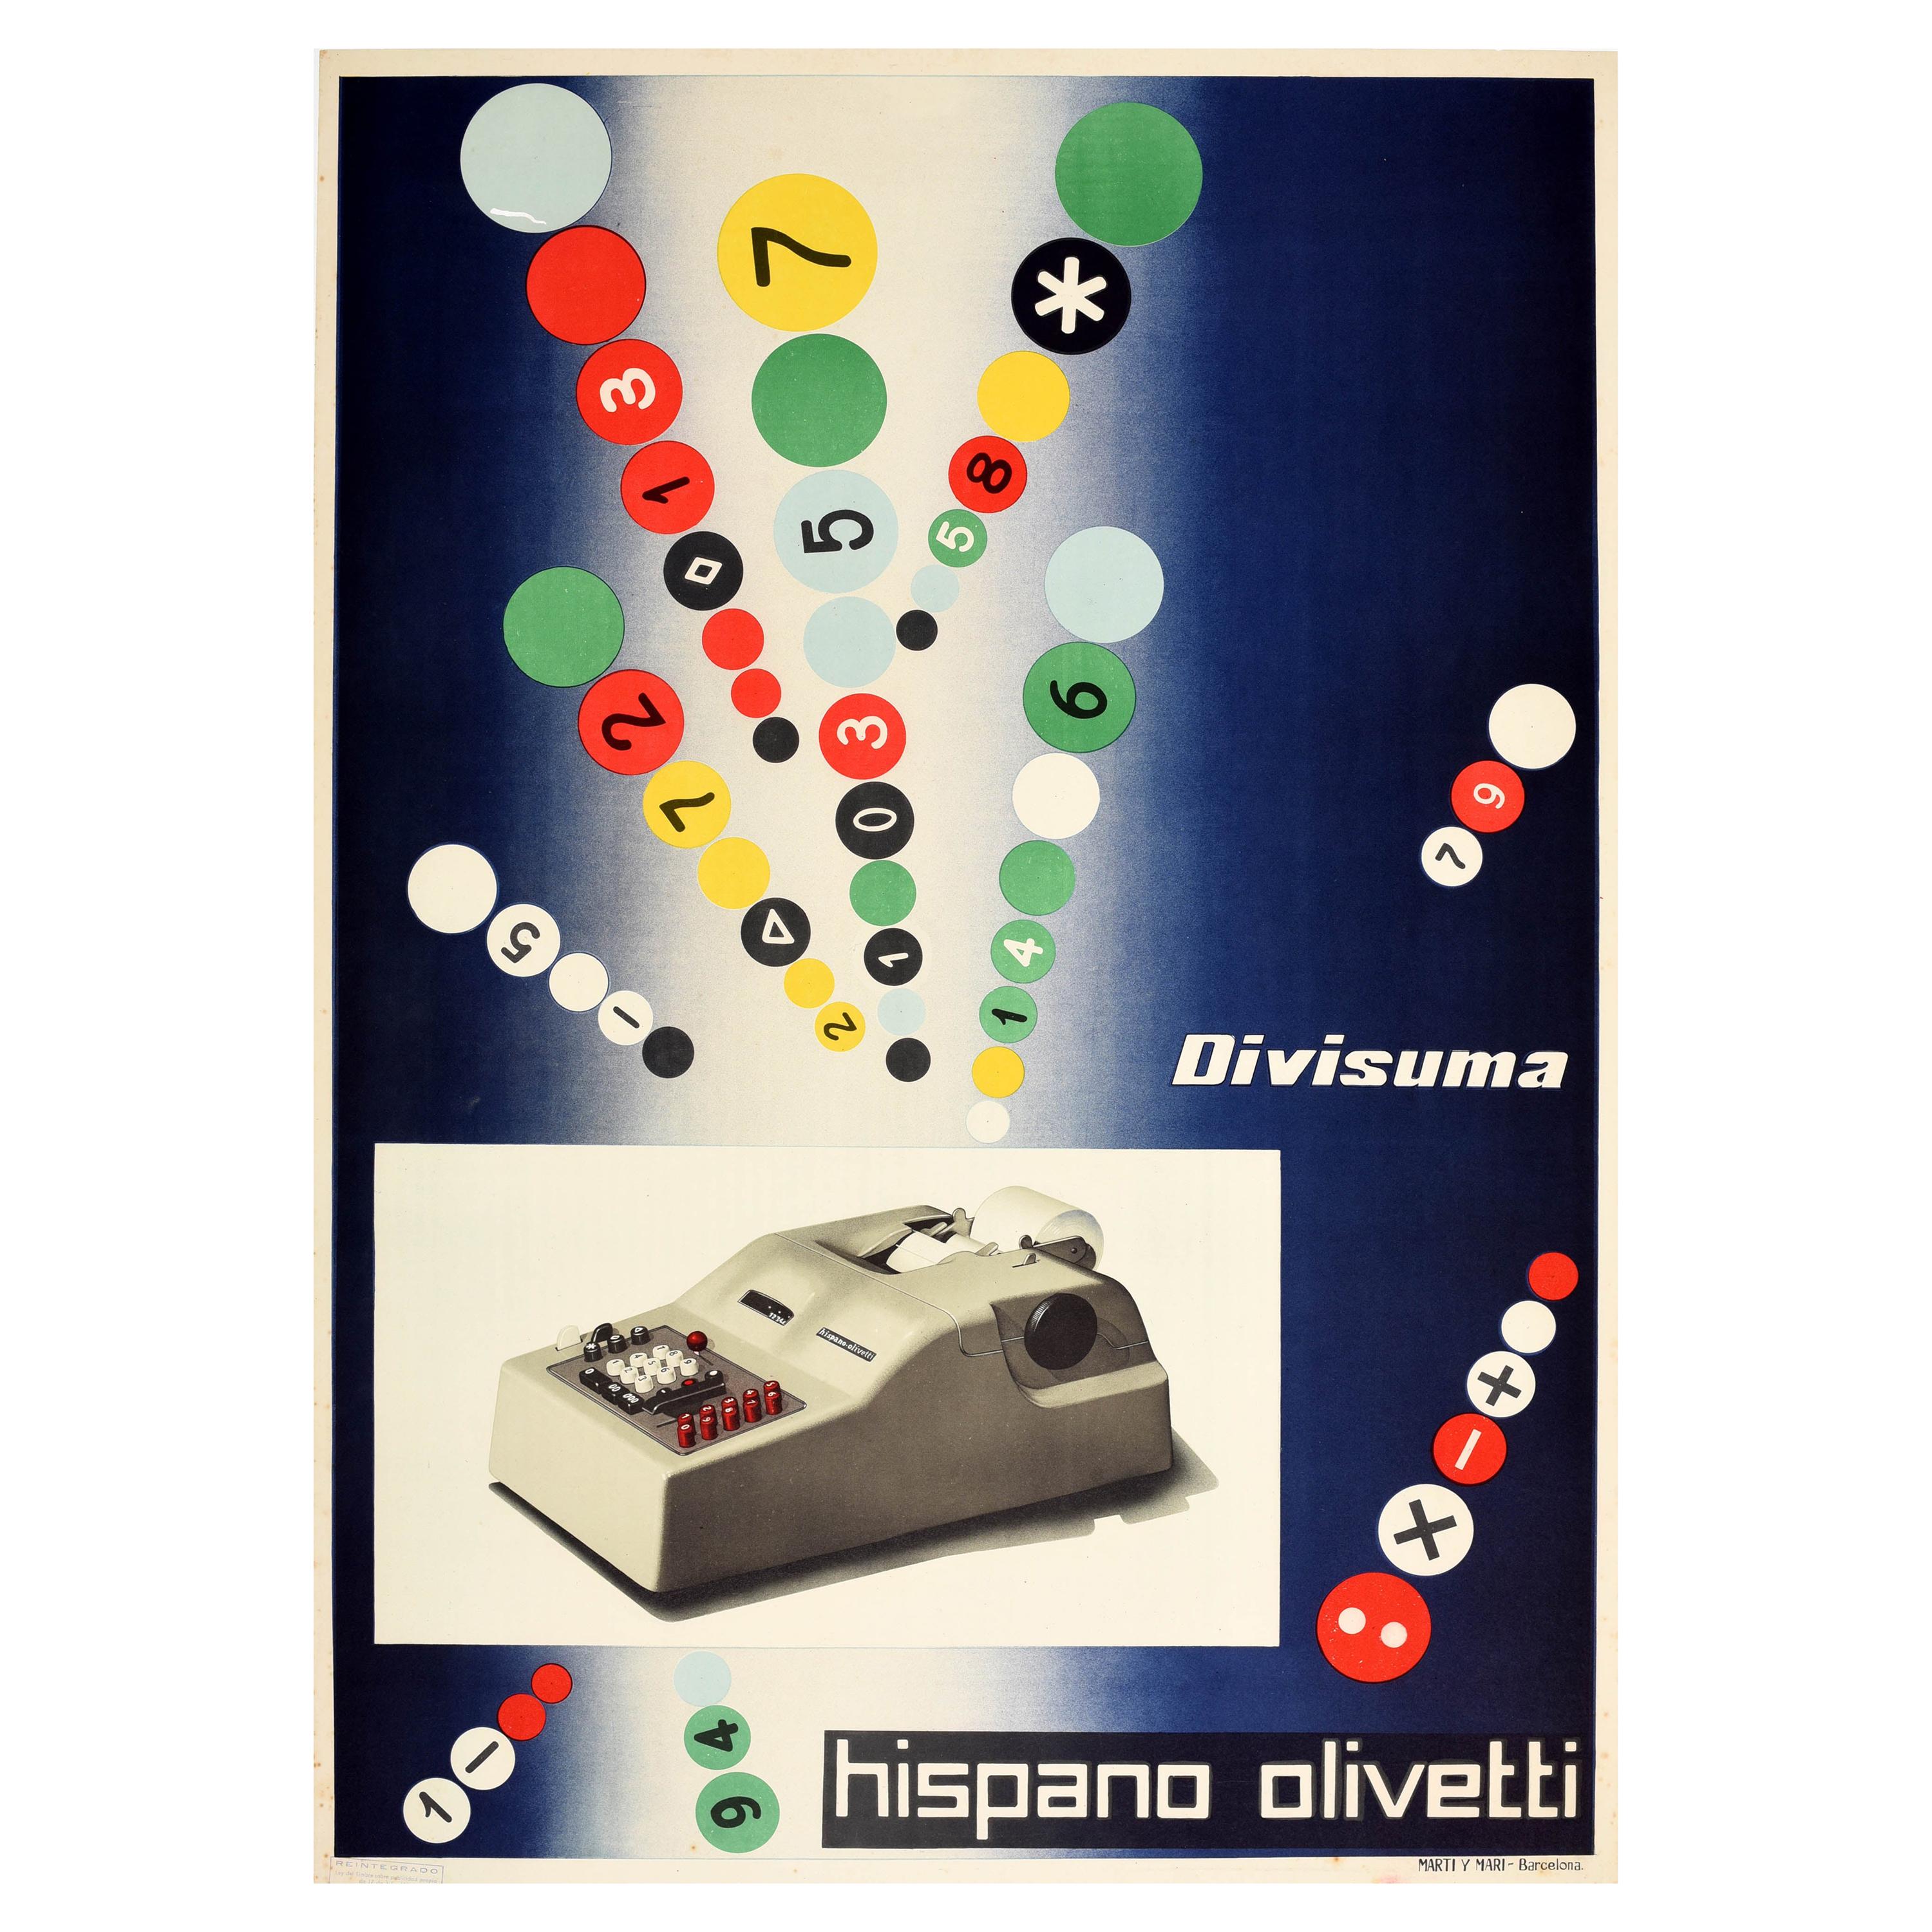 Original Vintage Poster Hispano Olivetti Divisuma Electric Calculator Midcentury